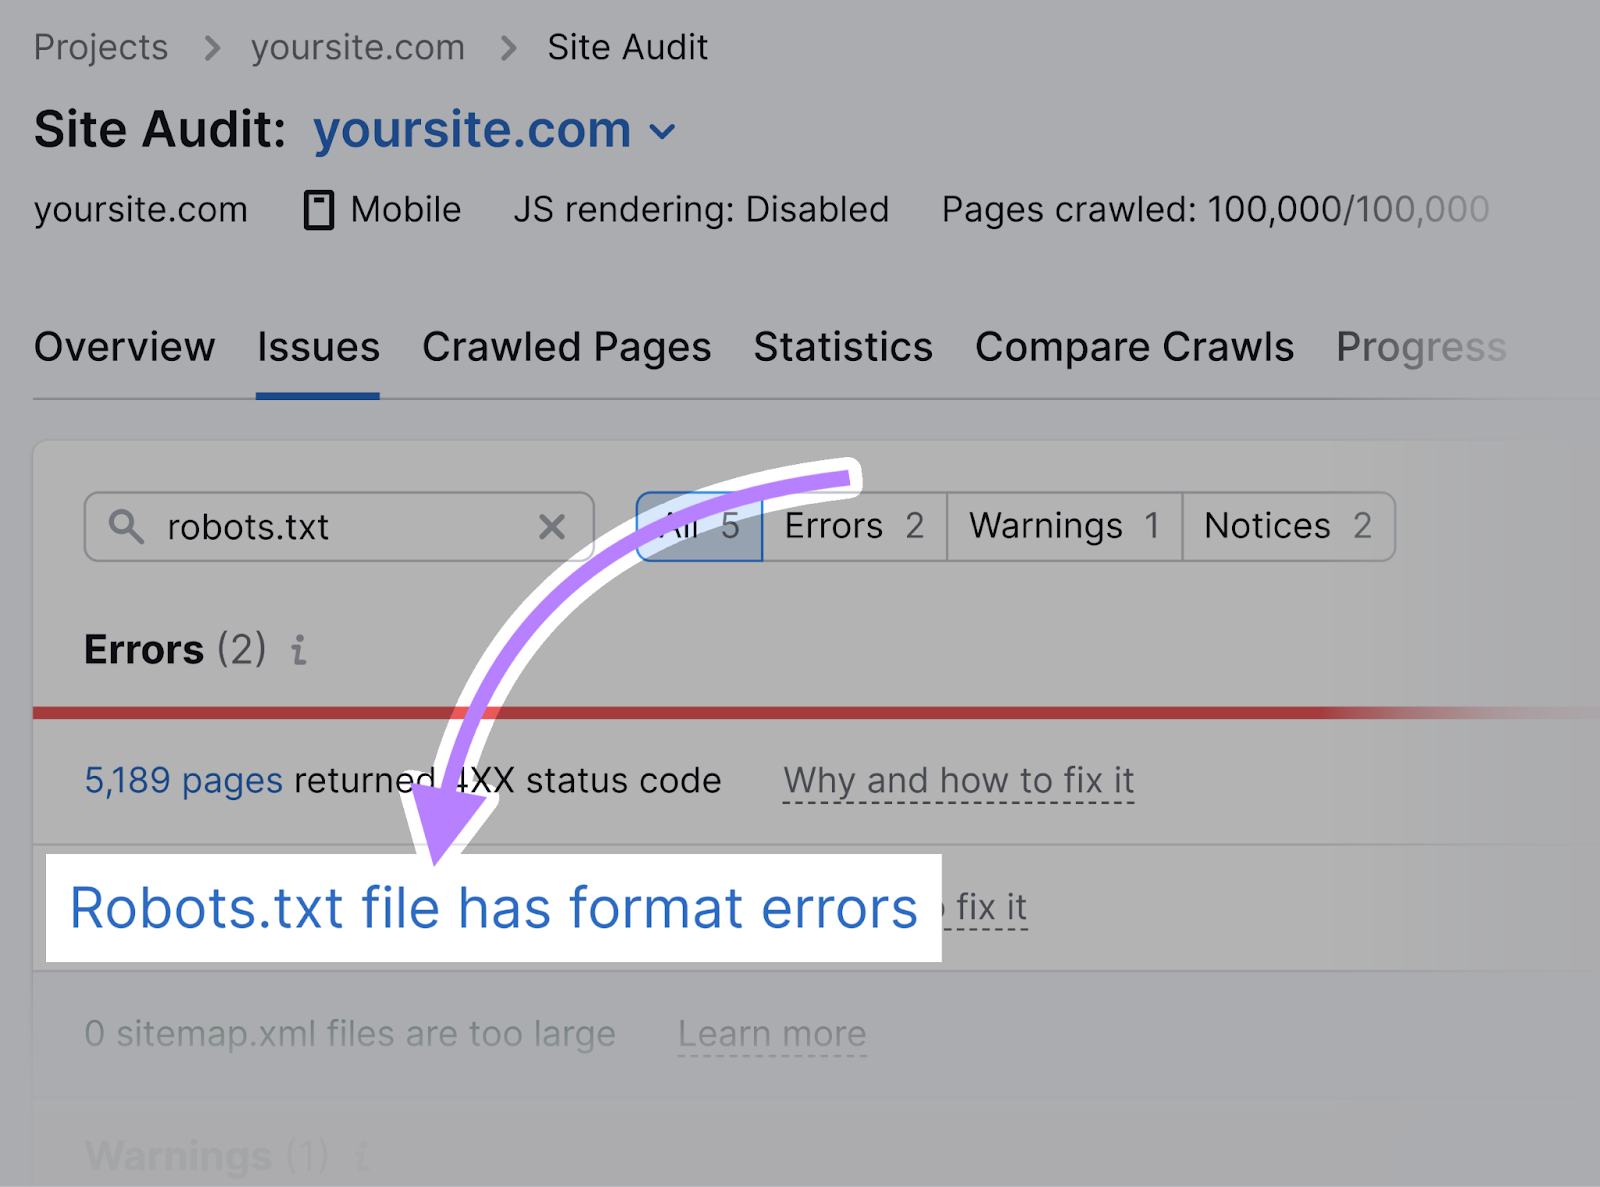 “Robots.txt file has format errors”